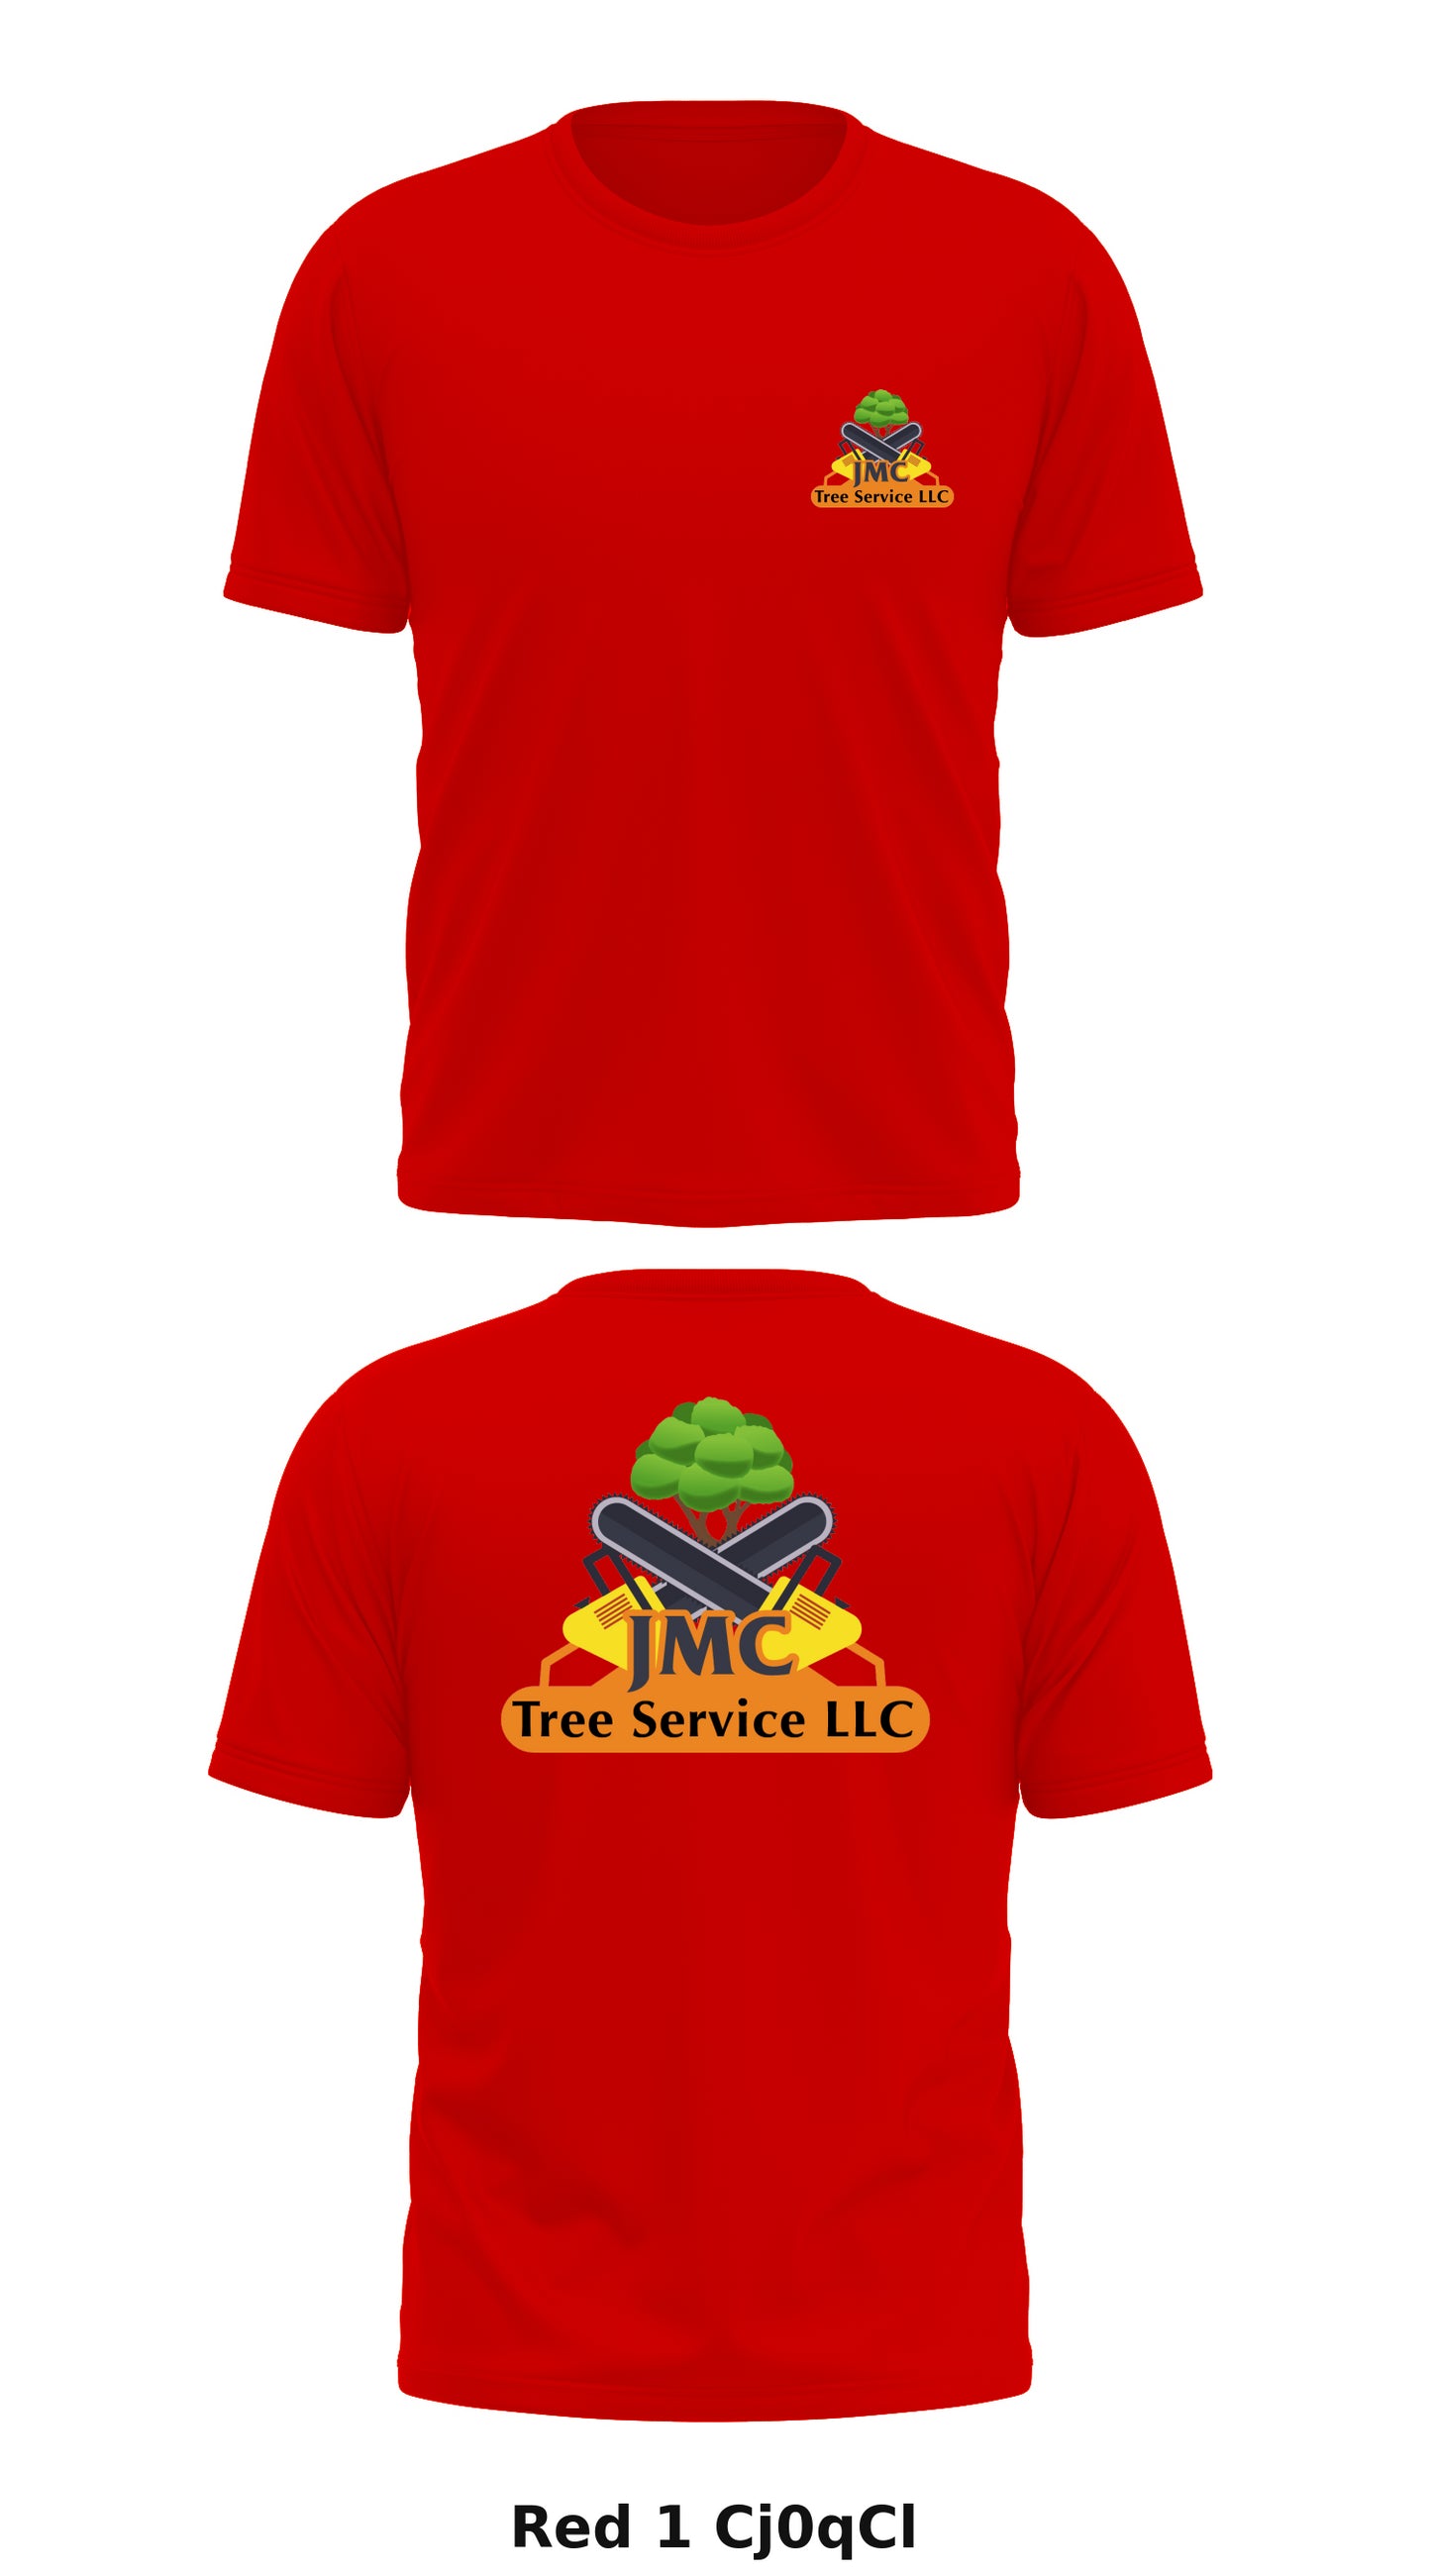 JMC Tree Service LLC. Store 1 Core Men's SS Performance Tee - Cj0qCl